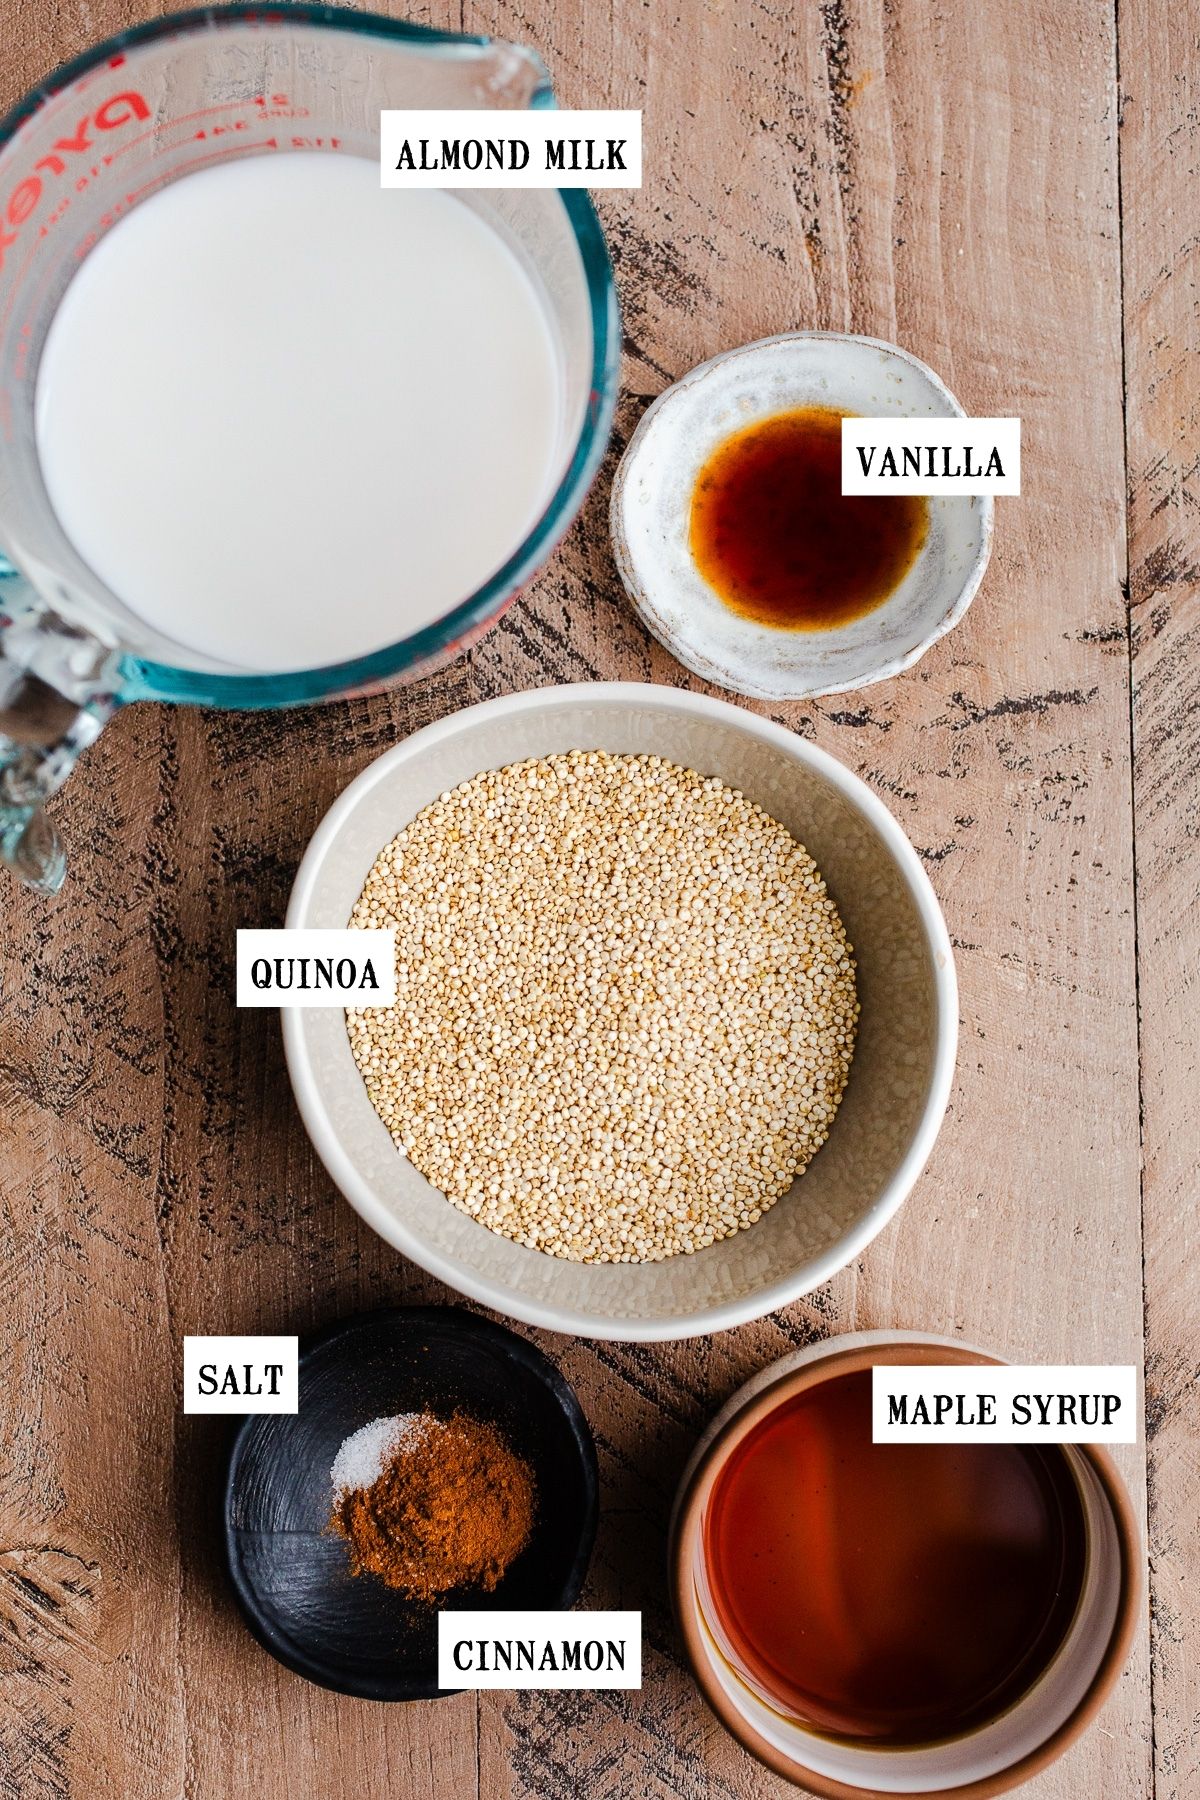 Ingredients to make quinoa porridge in small bowls. 